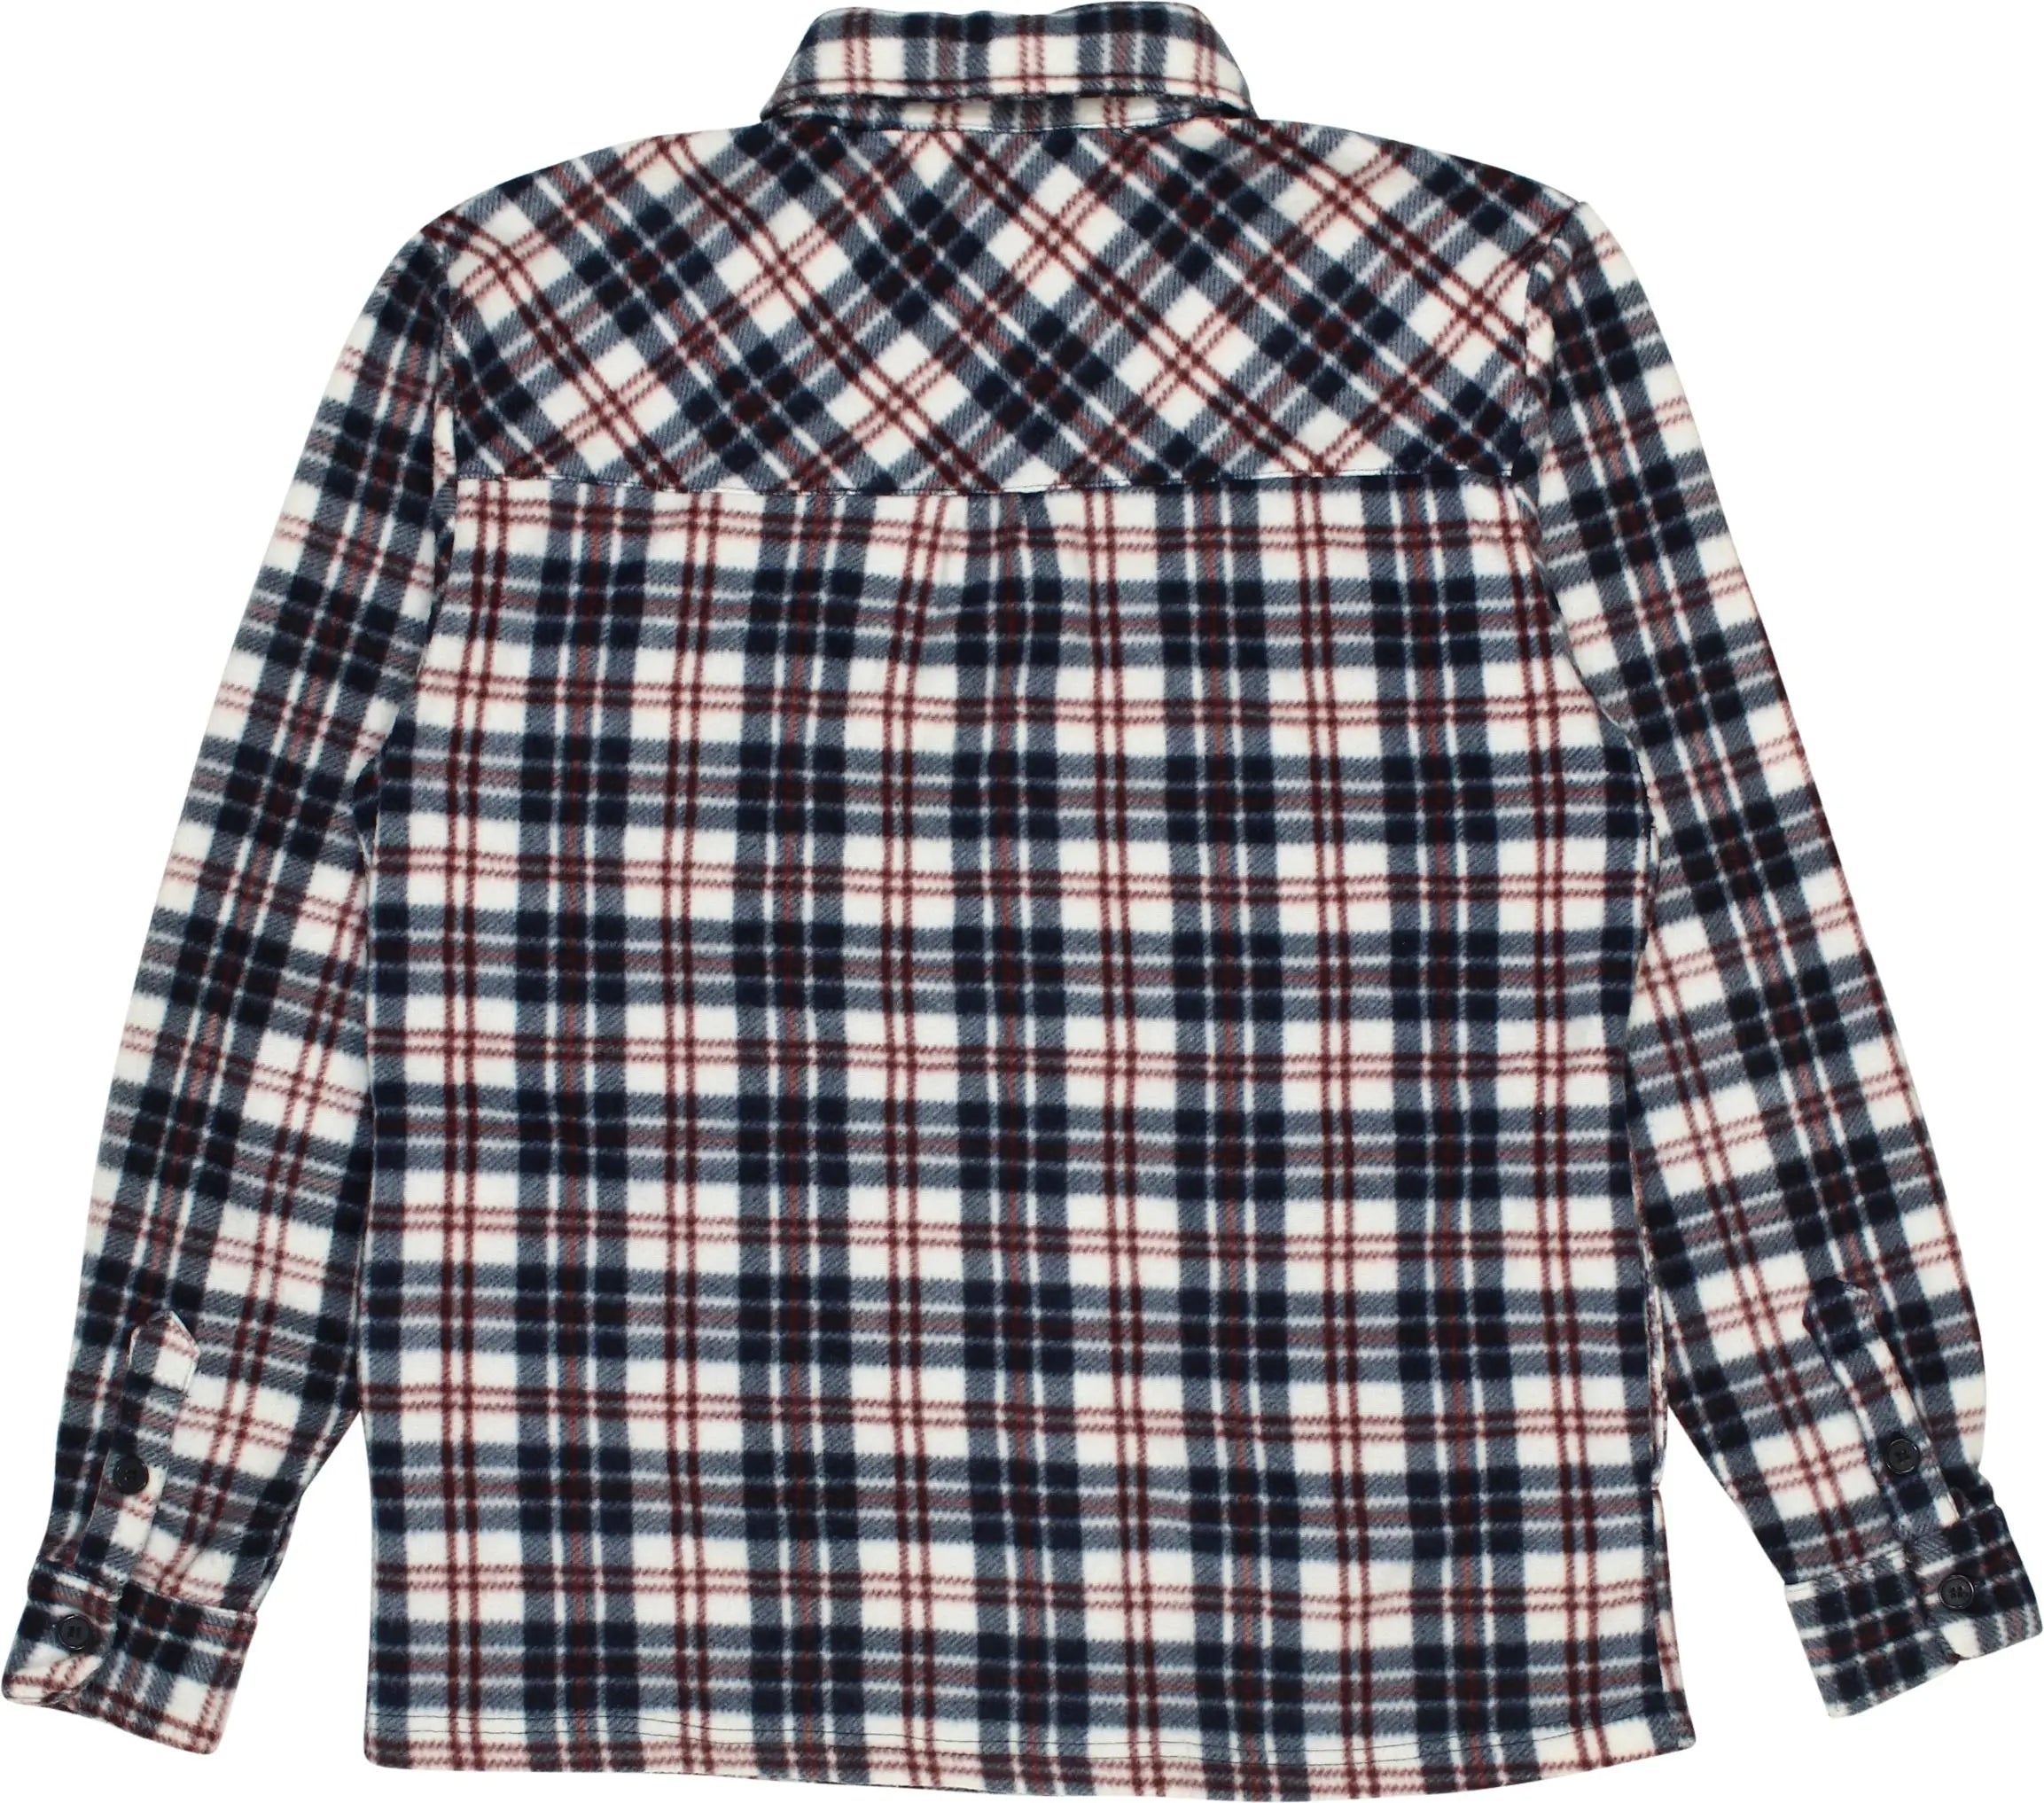 Kik - Fleece Shirt- ThriftTale.com - Vintage and second handclothing